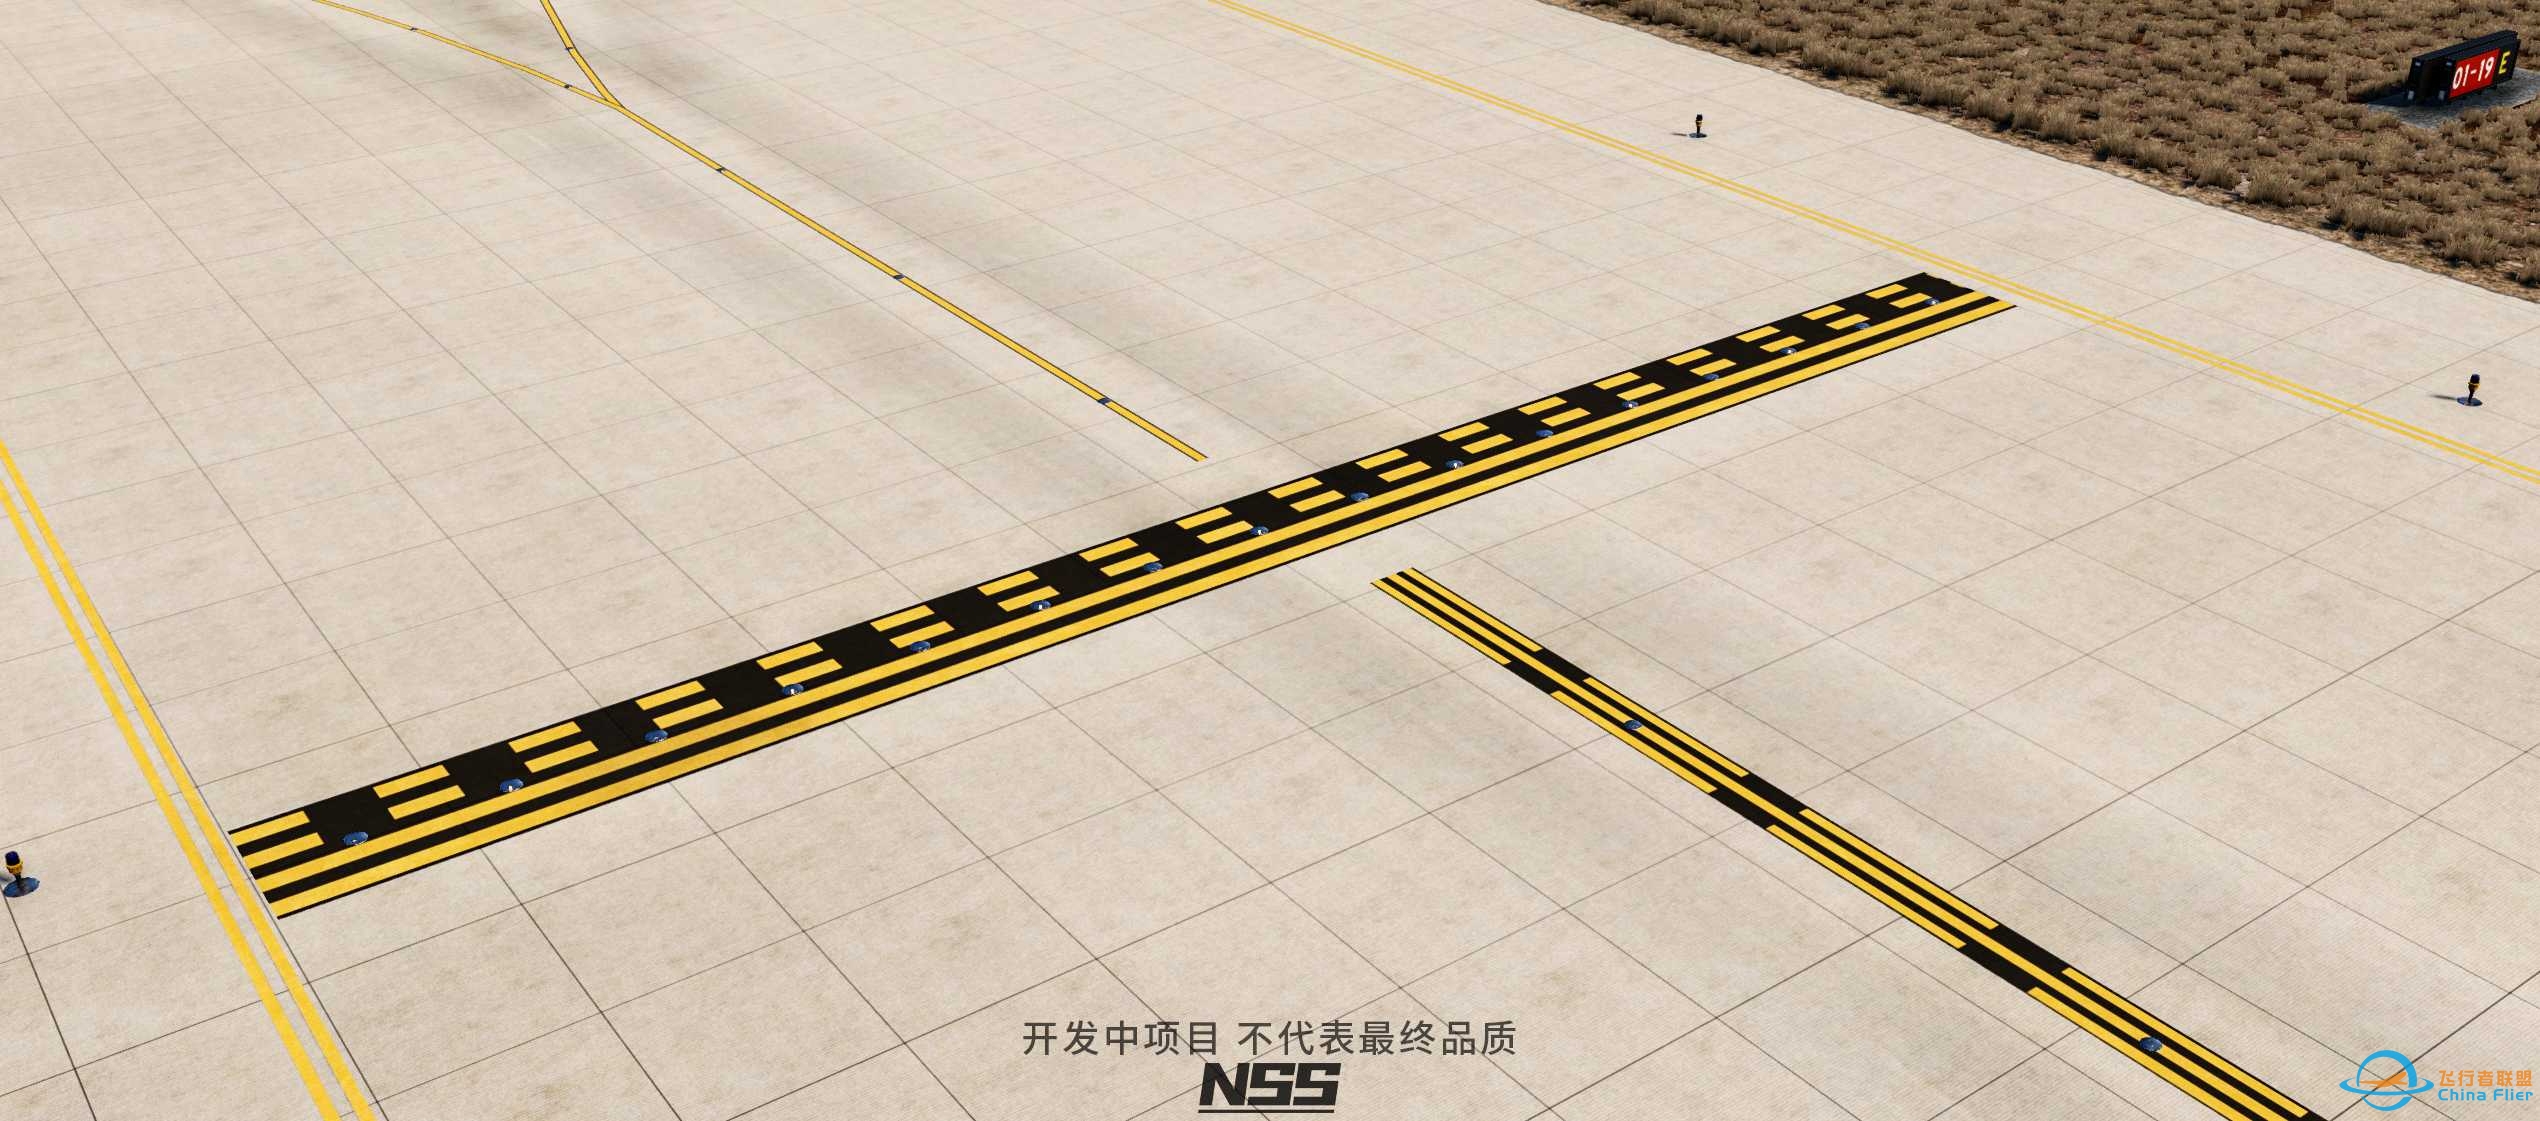 NSS地景开发组 ZSJN 济南遥墙国际机场项目预览 兼公布-9538 